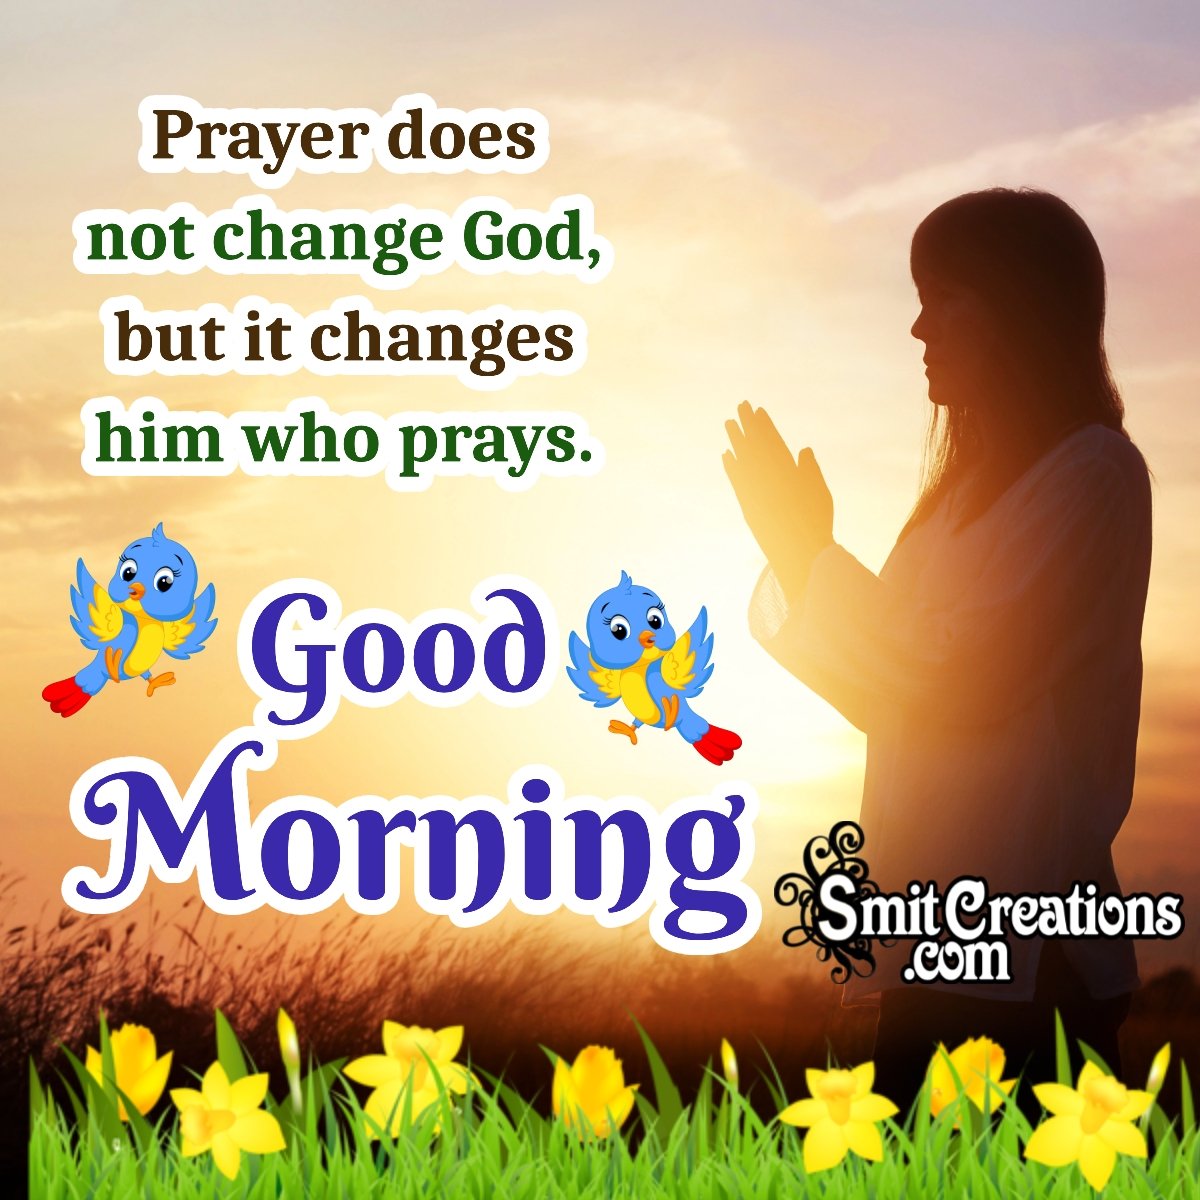 Good Morning Quote On Prayer